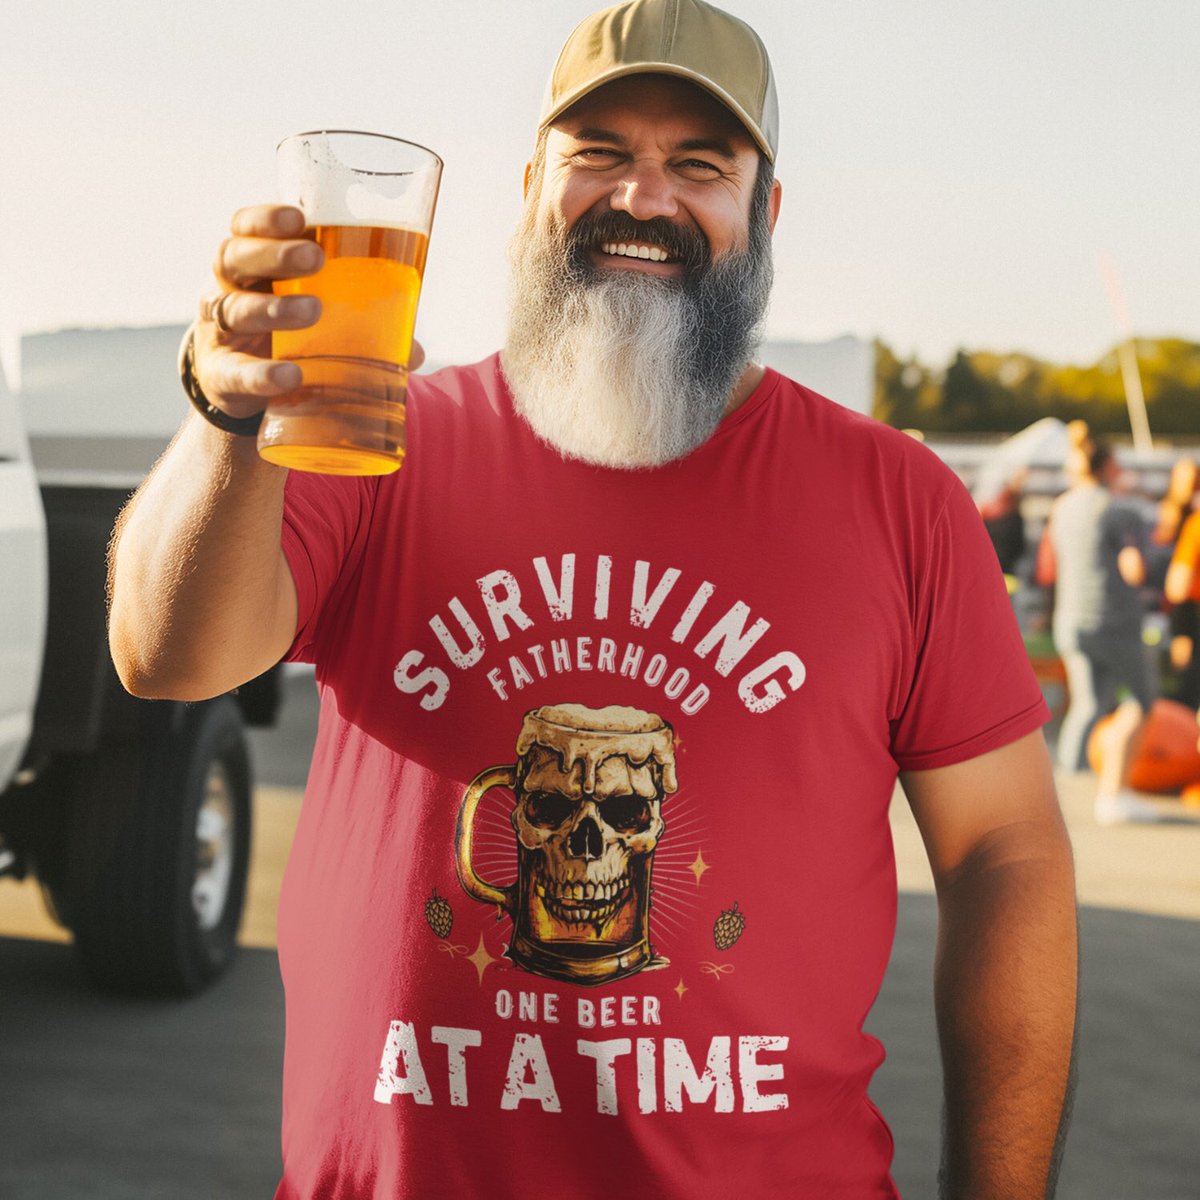 Surviving fatherhood one beer at a time T-Shirt zazzle.com/z/ab2bru8j?rf=… via @zazzle
#FathersDay #fatherhood #beerdad #survivingfatherhood #funnybeergift #zazzlemade